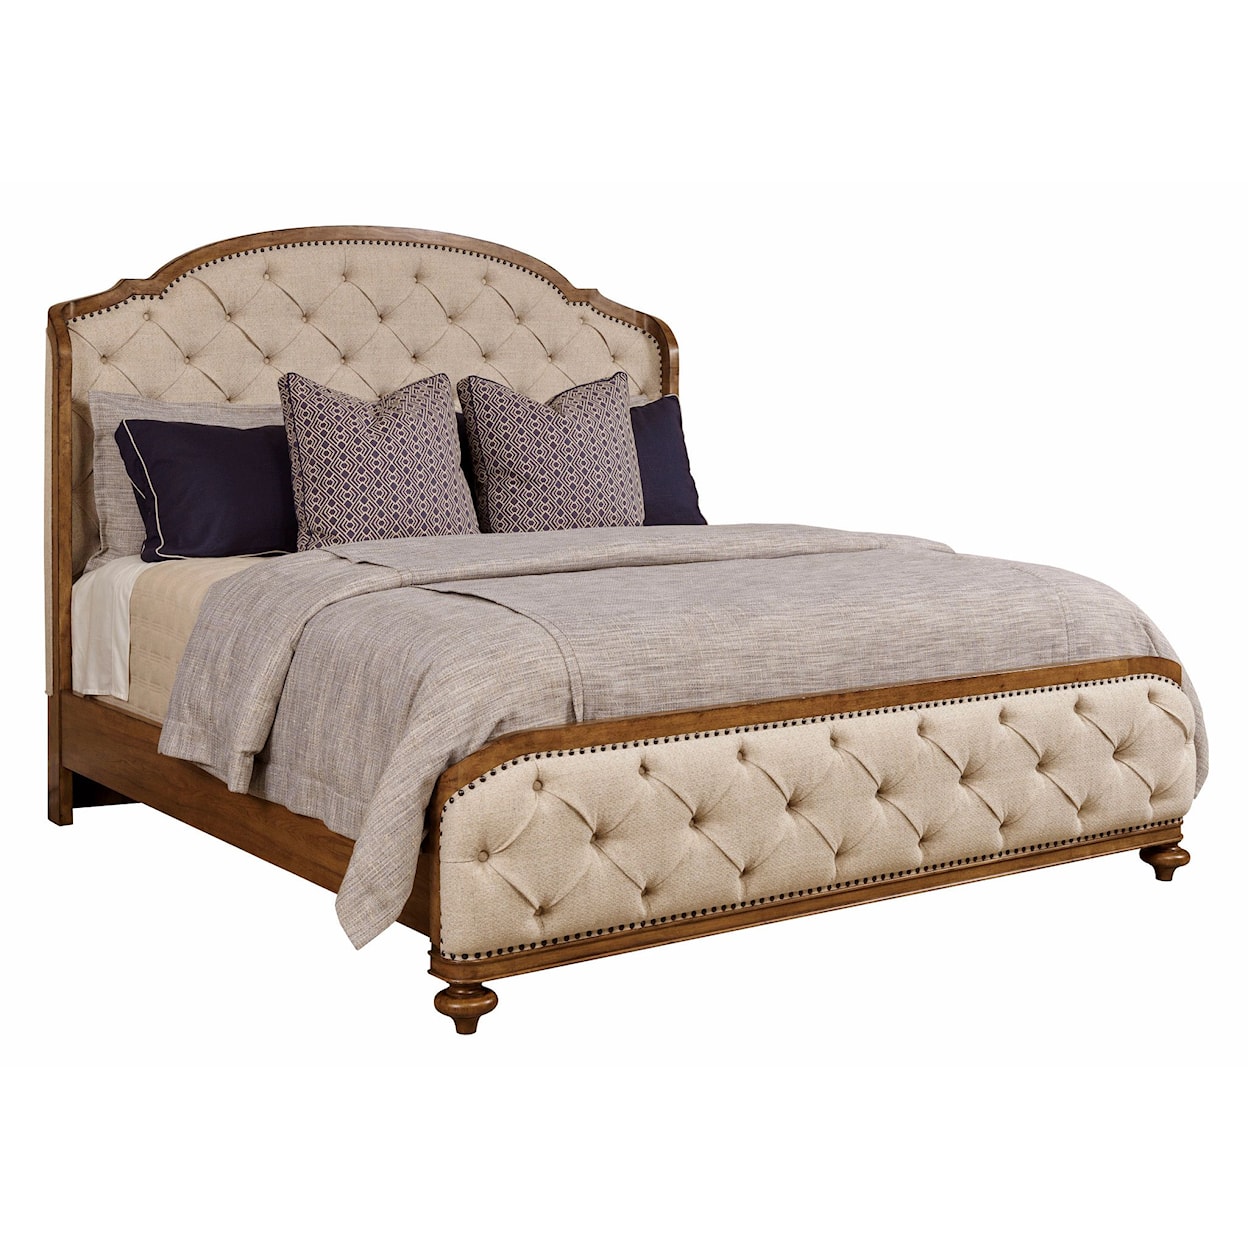 American Drew Berkshire King Upholstered Bed